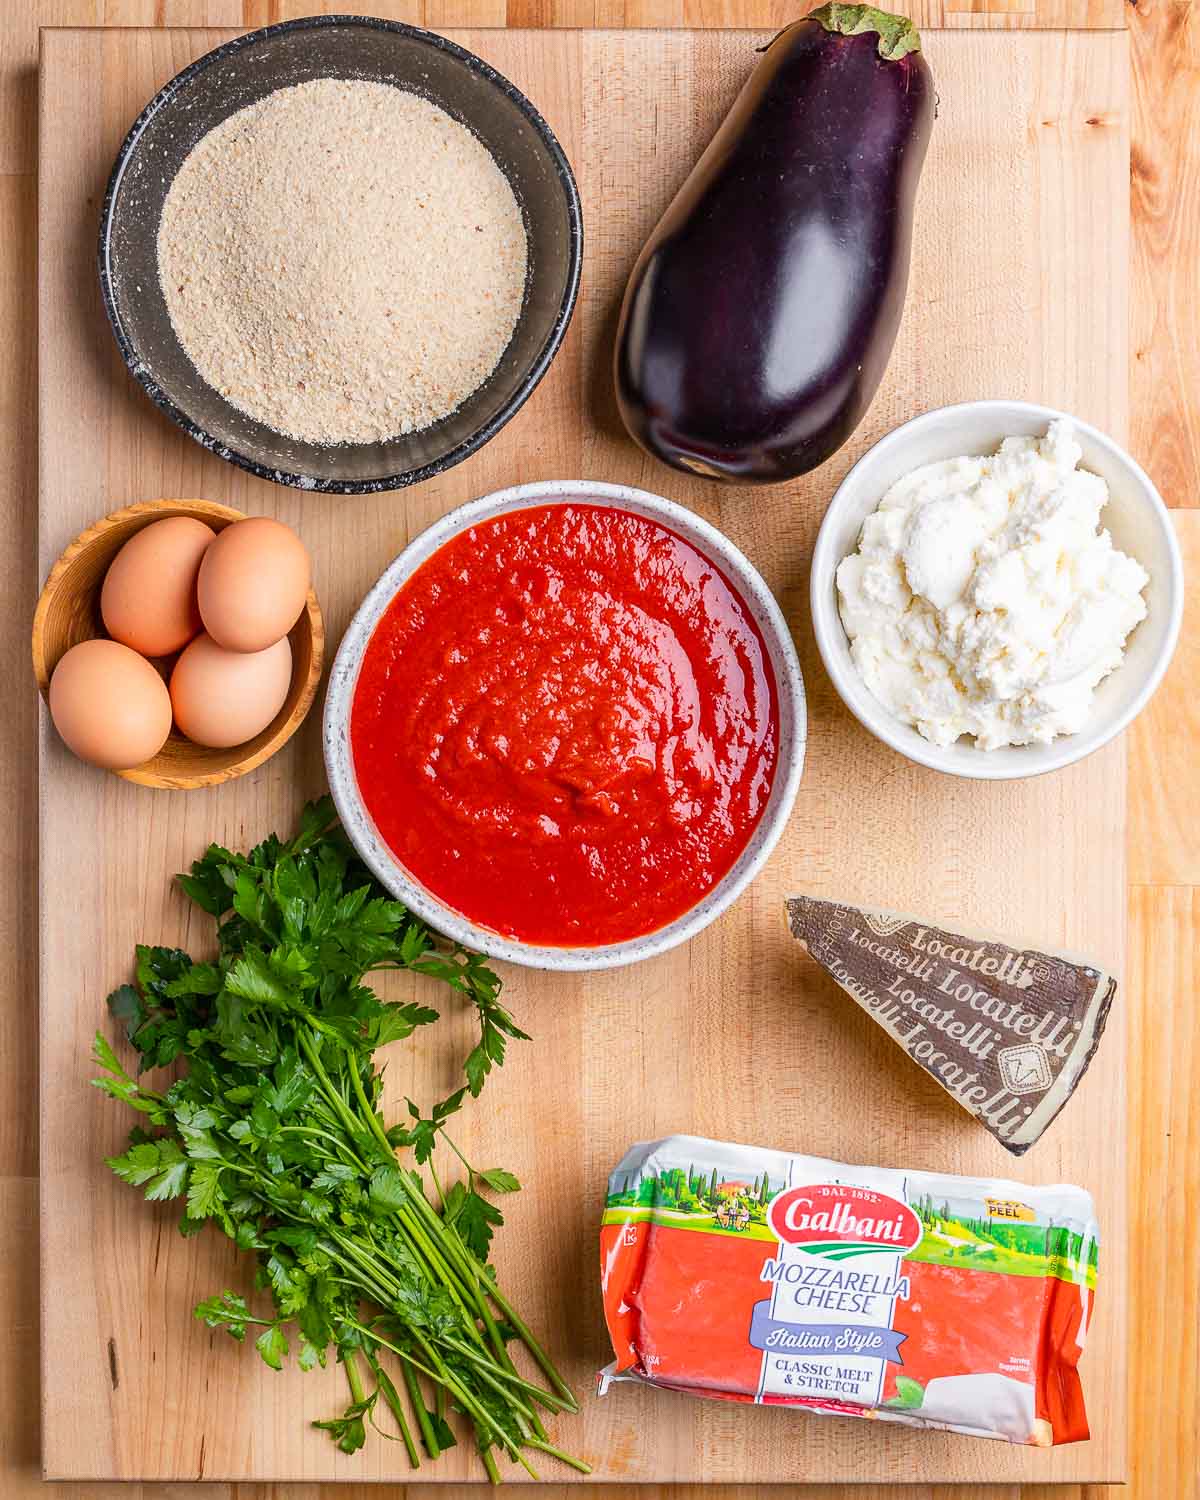 Ingredients shown: breadcrumbs, eggplant, eggs, marinara sauce, ricotta, parsley, Pecorino Romano, and mozzarella.